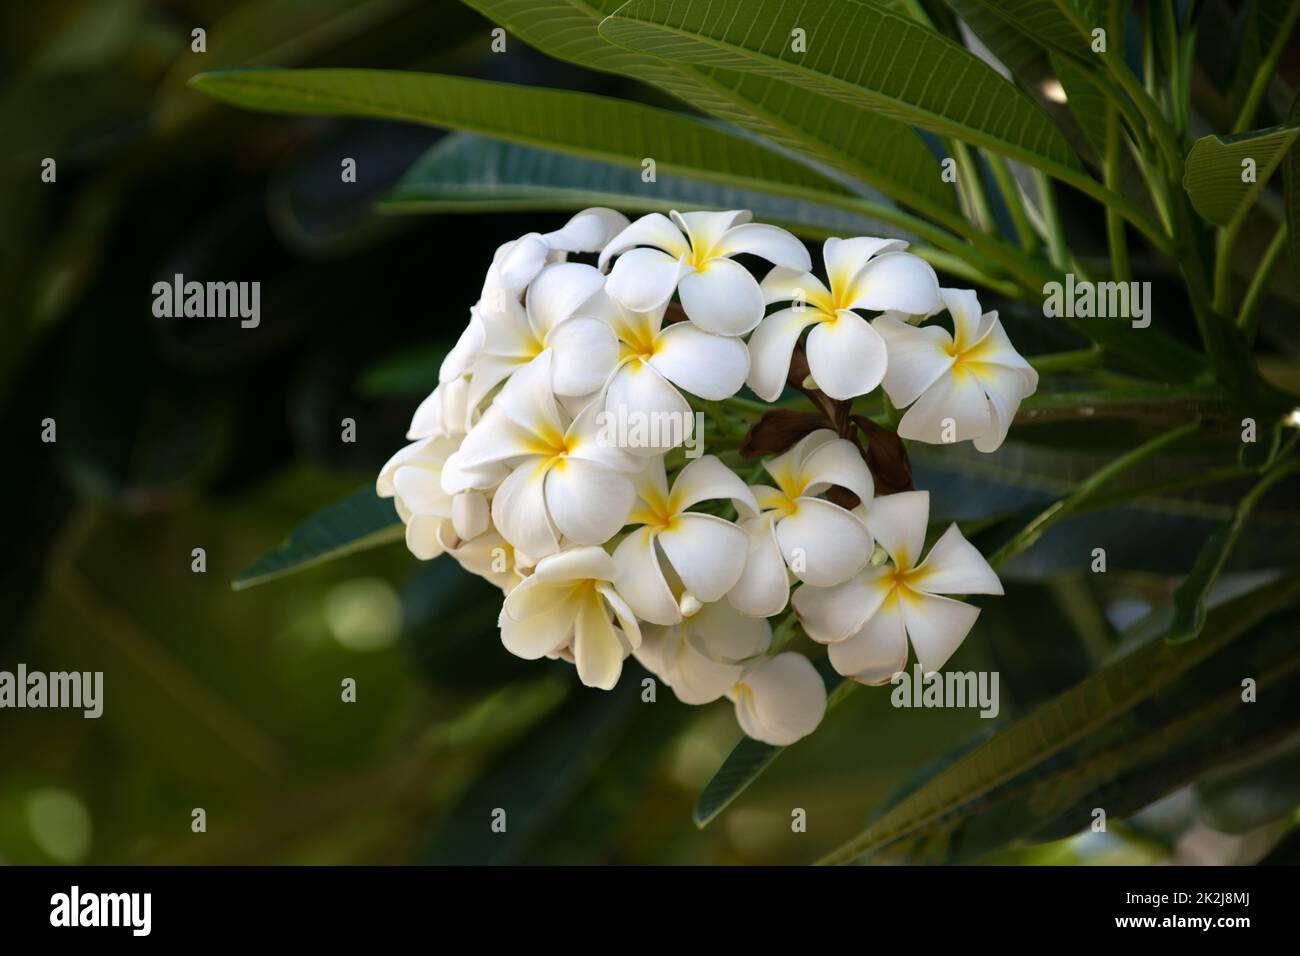 White plumeria rubra flowers. Frangipani flower. Plumeria pudica white flowers blooming, with green leaves background. Stock Photo